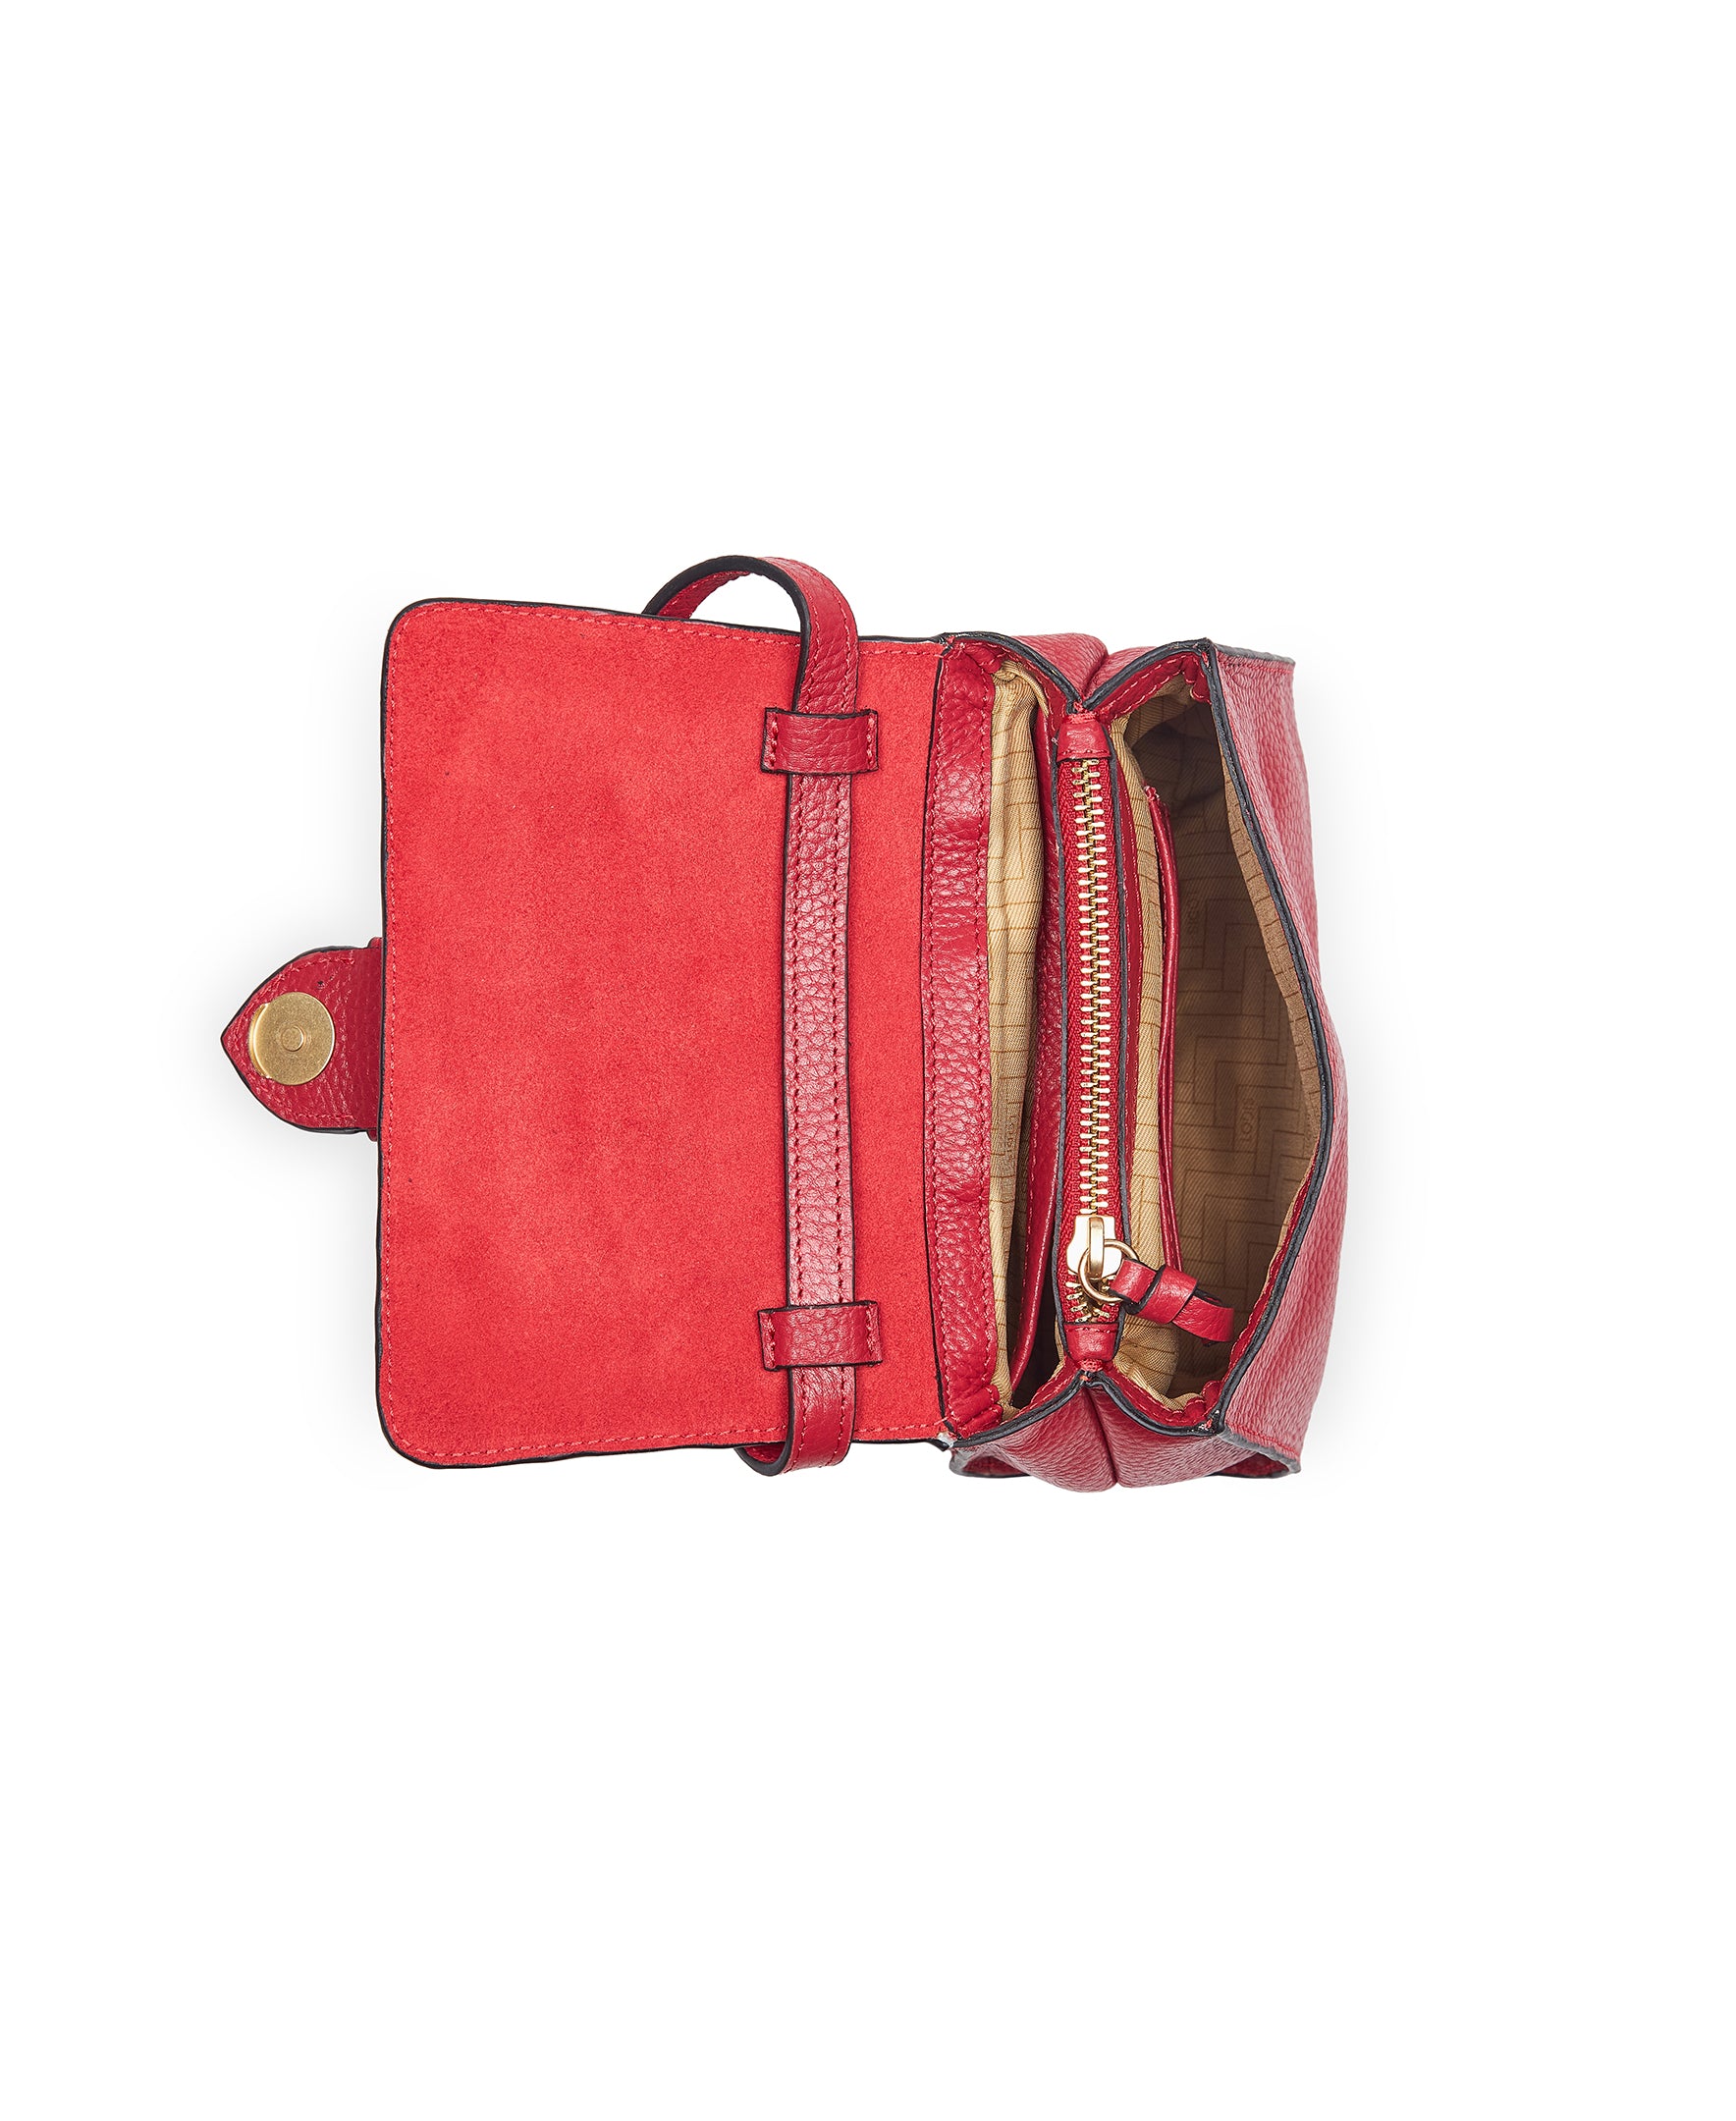 Shop now the stylish and  Versatile Multi-Use Crossbody bag | Lodis